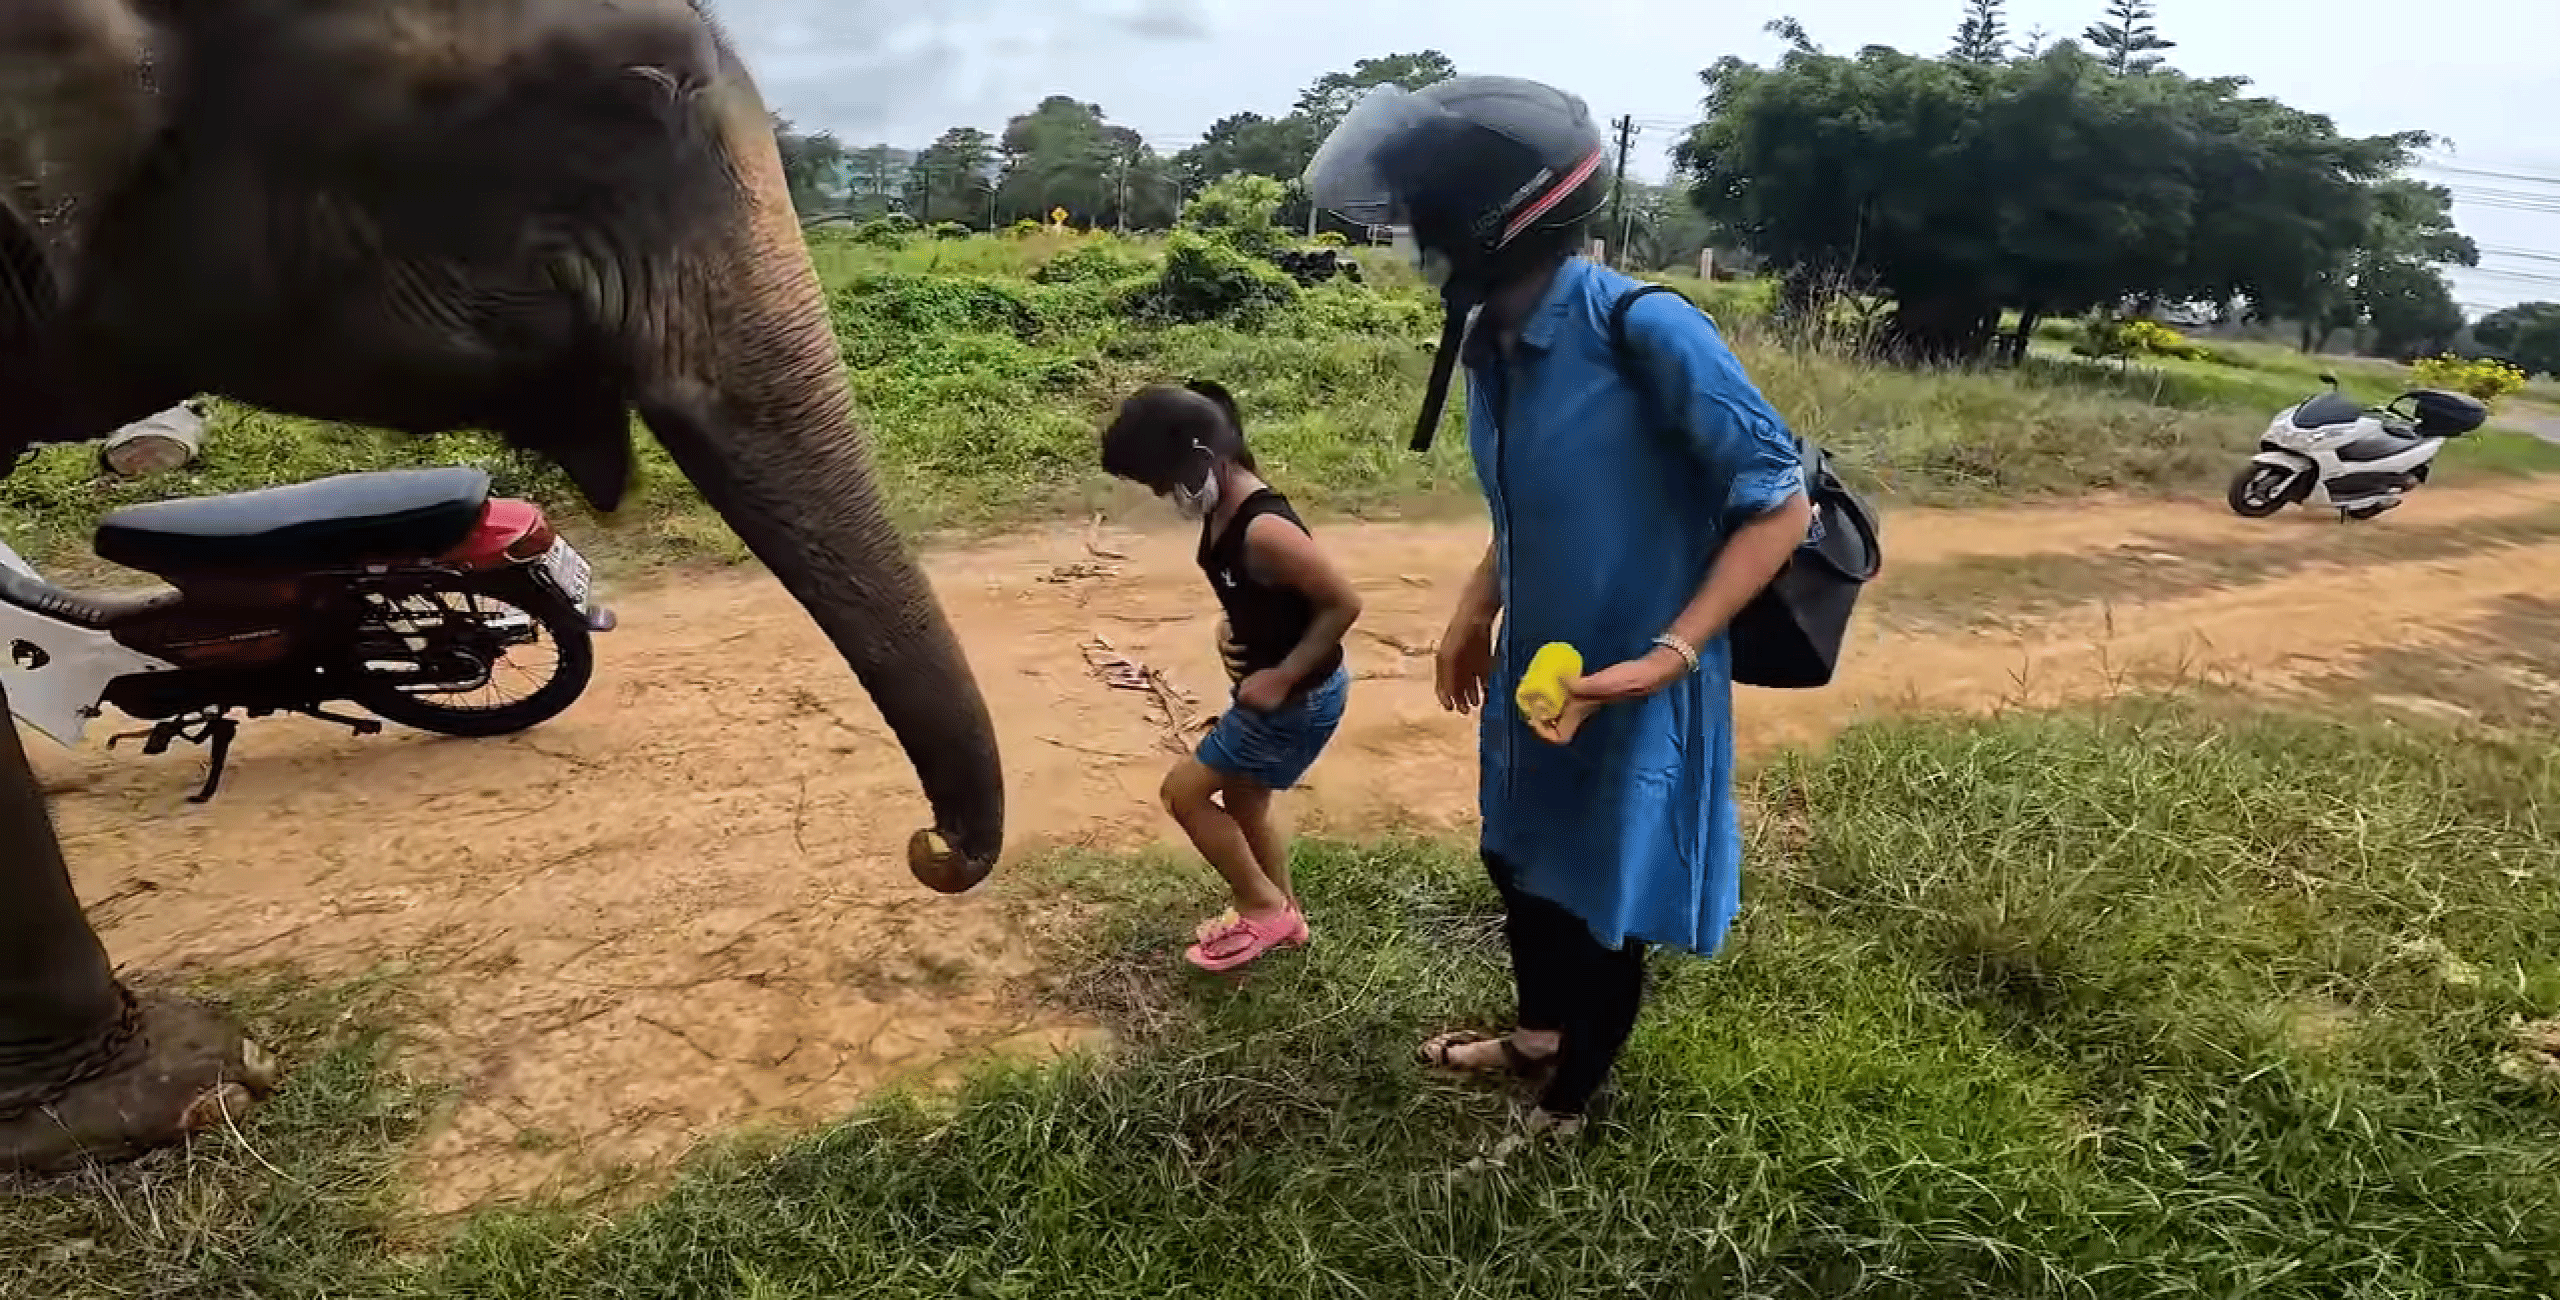 People feeding an elephant on the island of Koh Chang